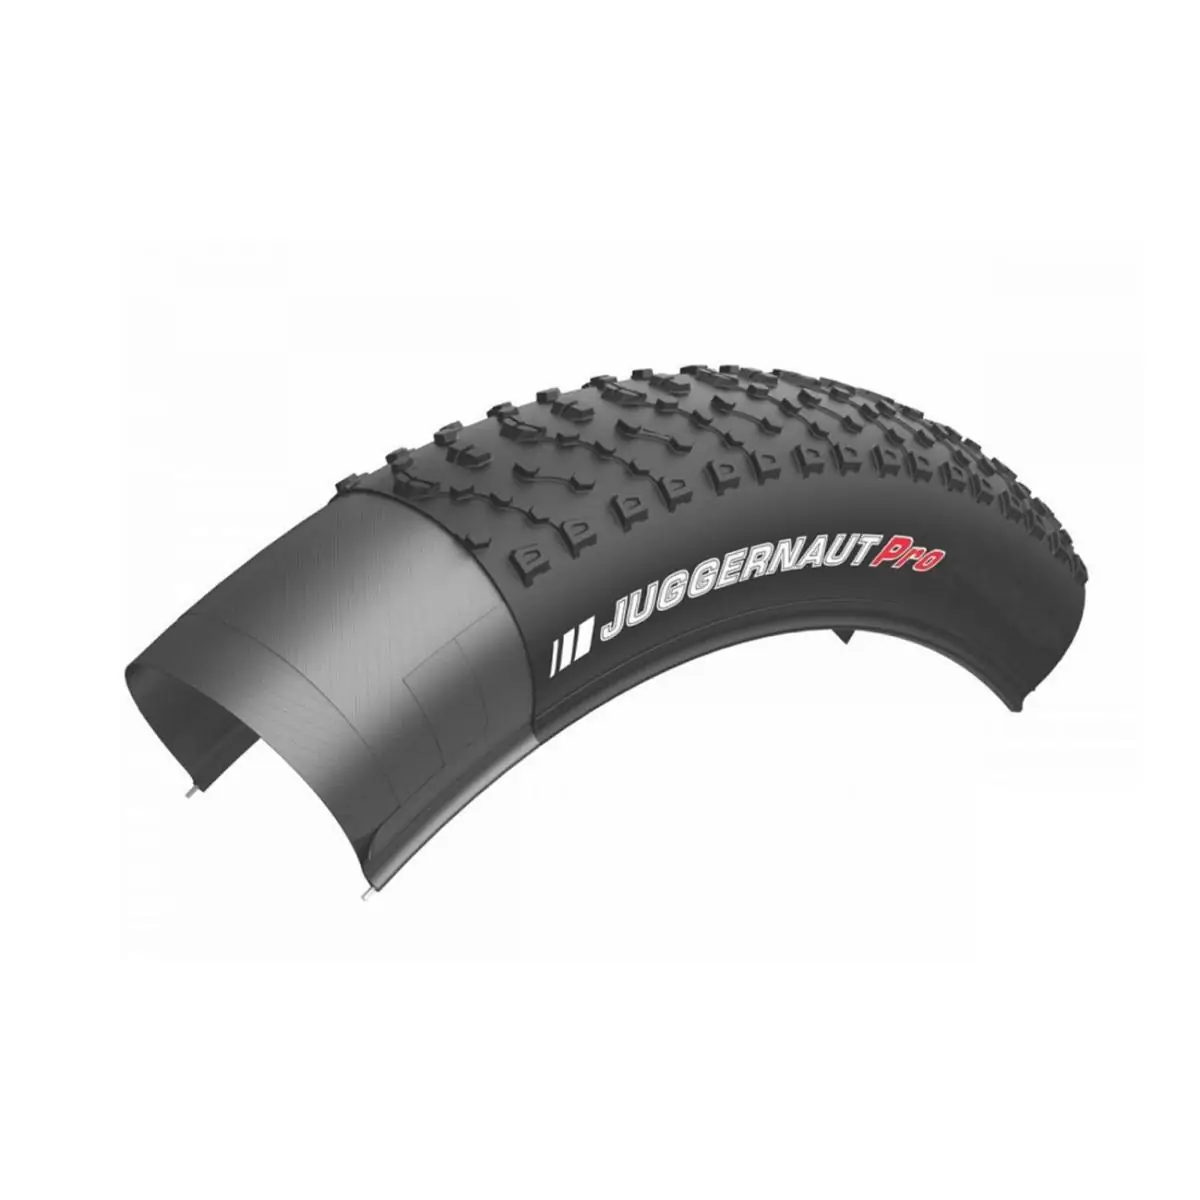 Fat Bike Tire Juggernaut Pro 26x4.0'' Race Dtc Tubeless Ready Black - image